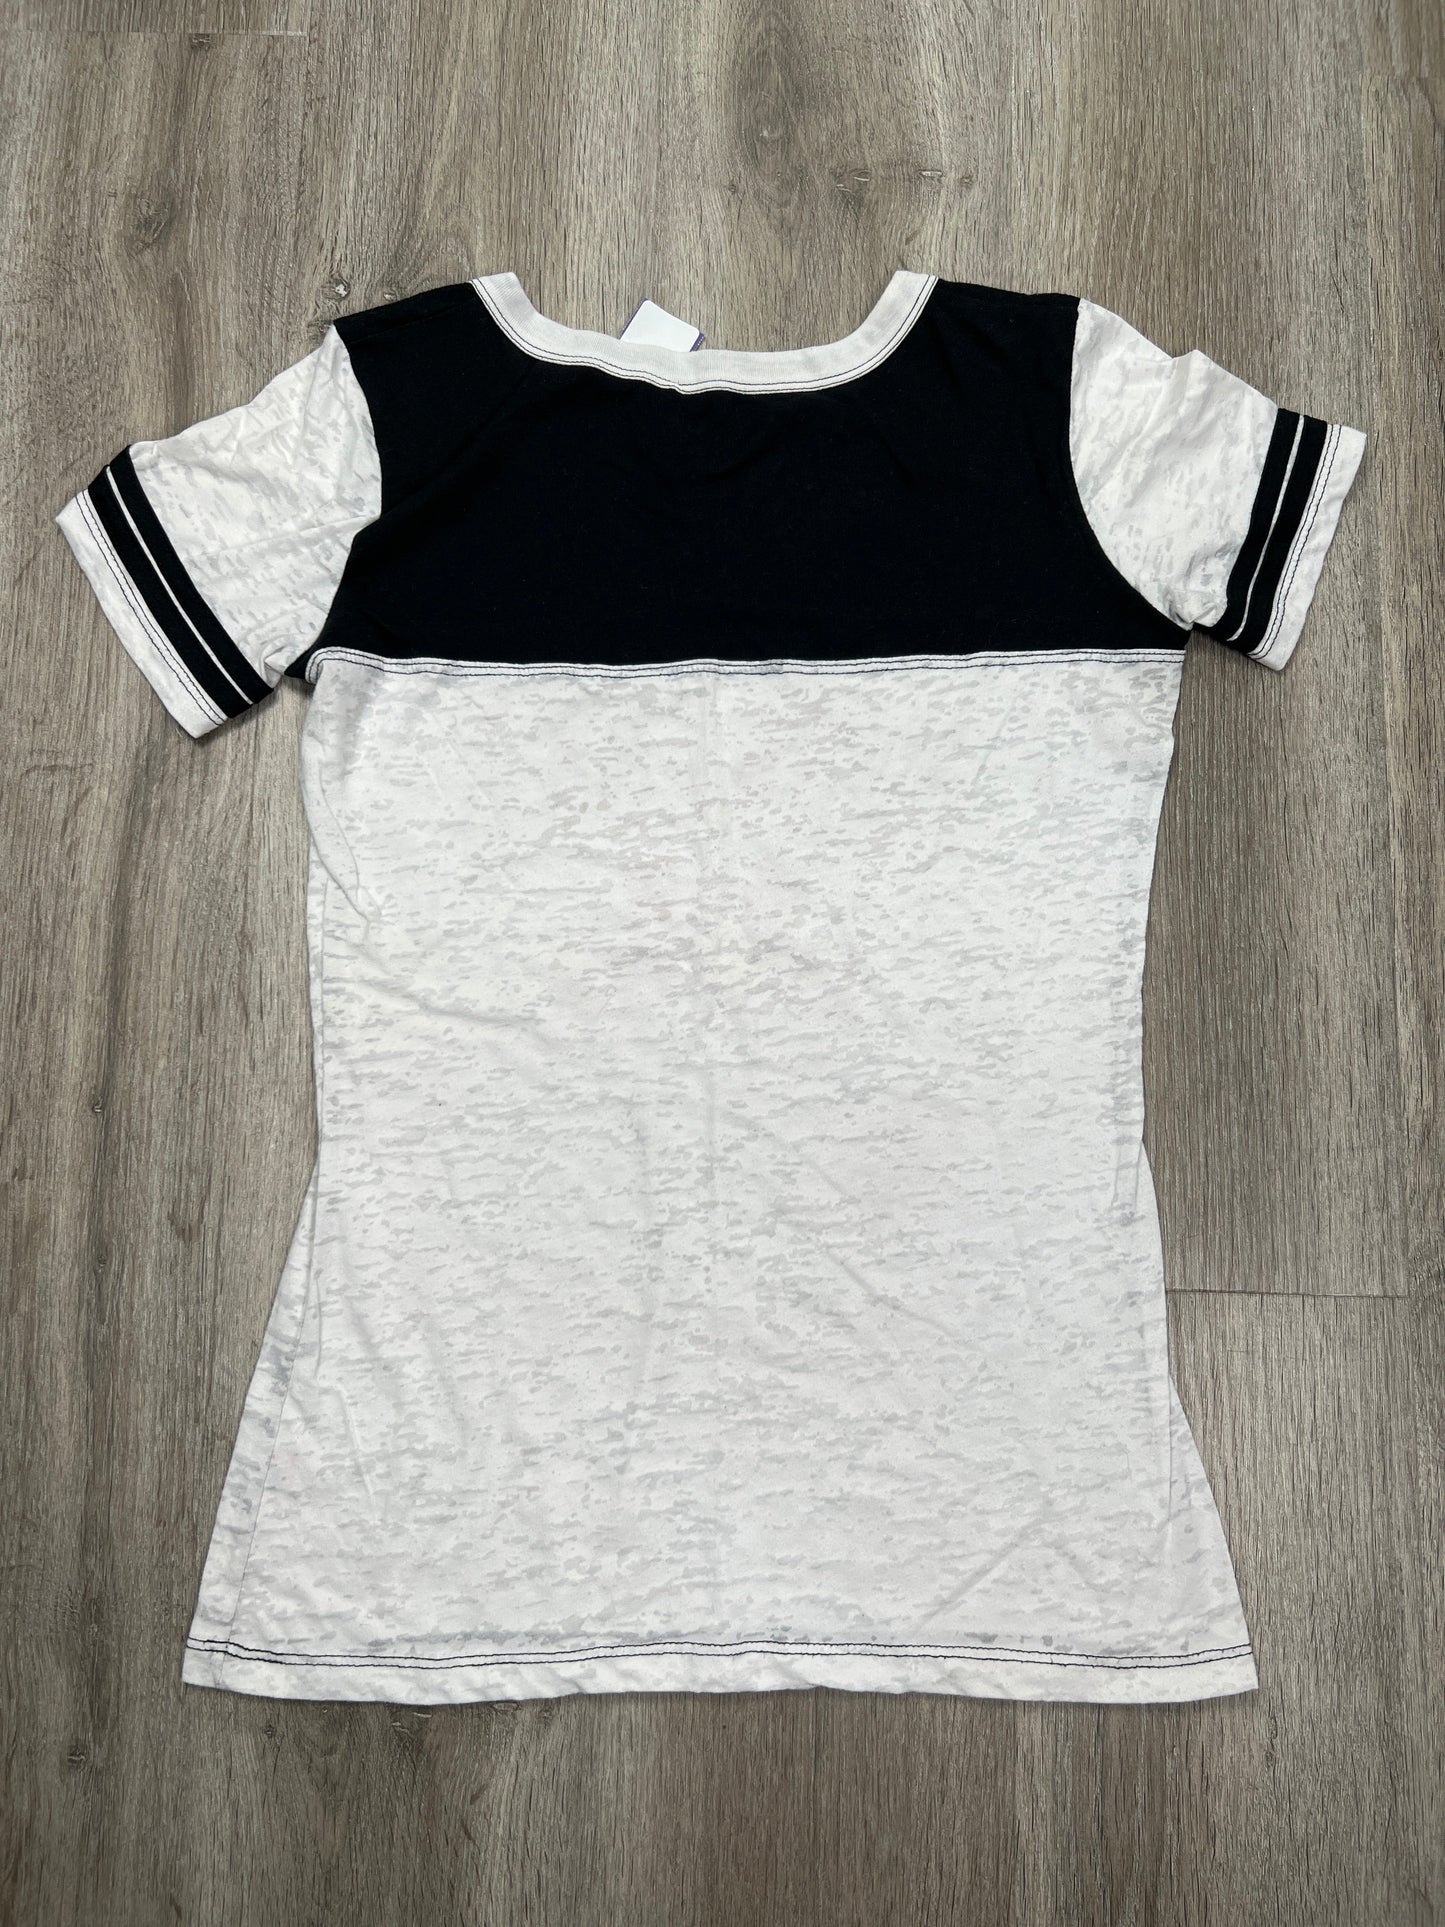 Black & White Top Short Sleeve BLUE 84, Size L